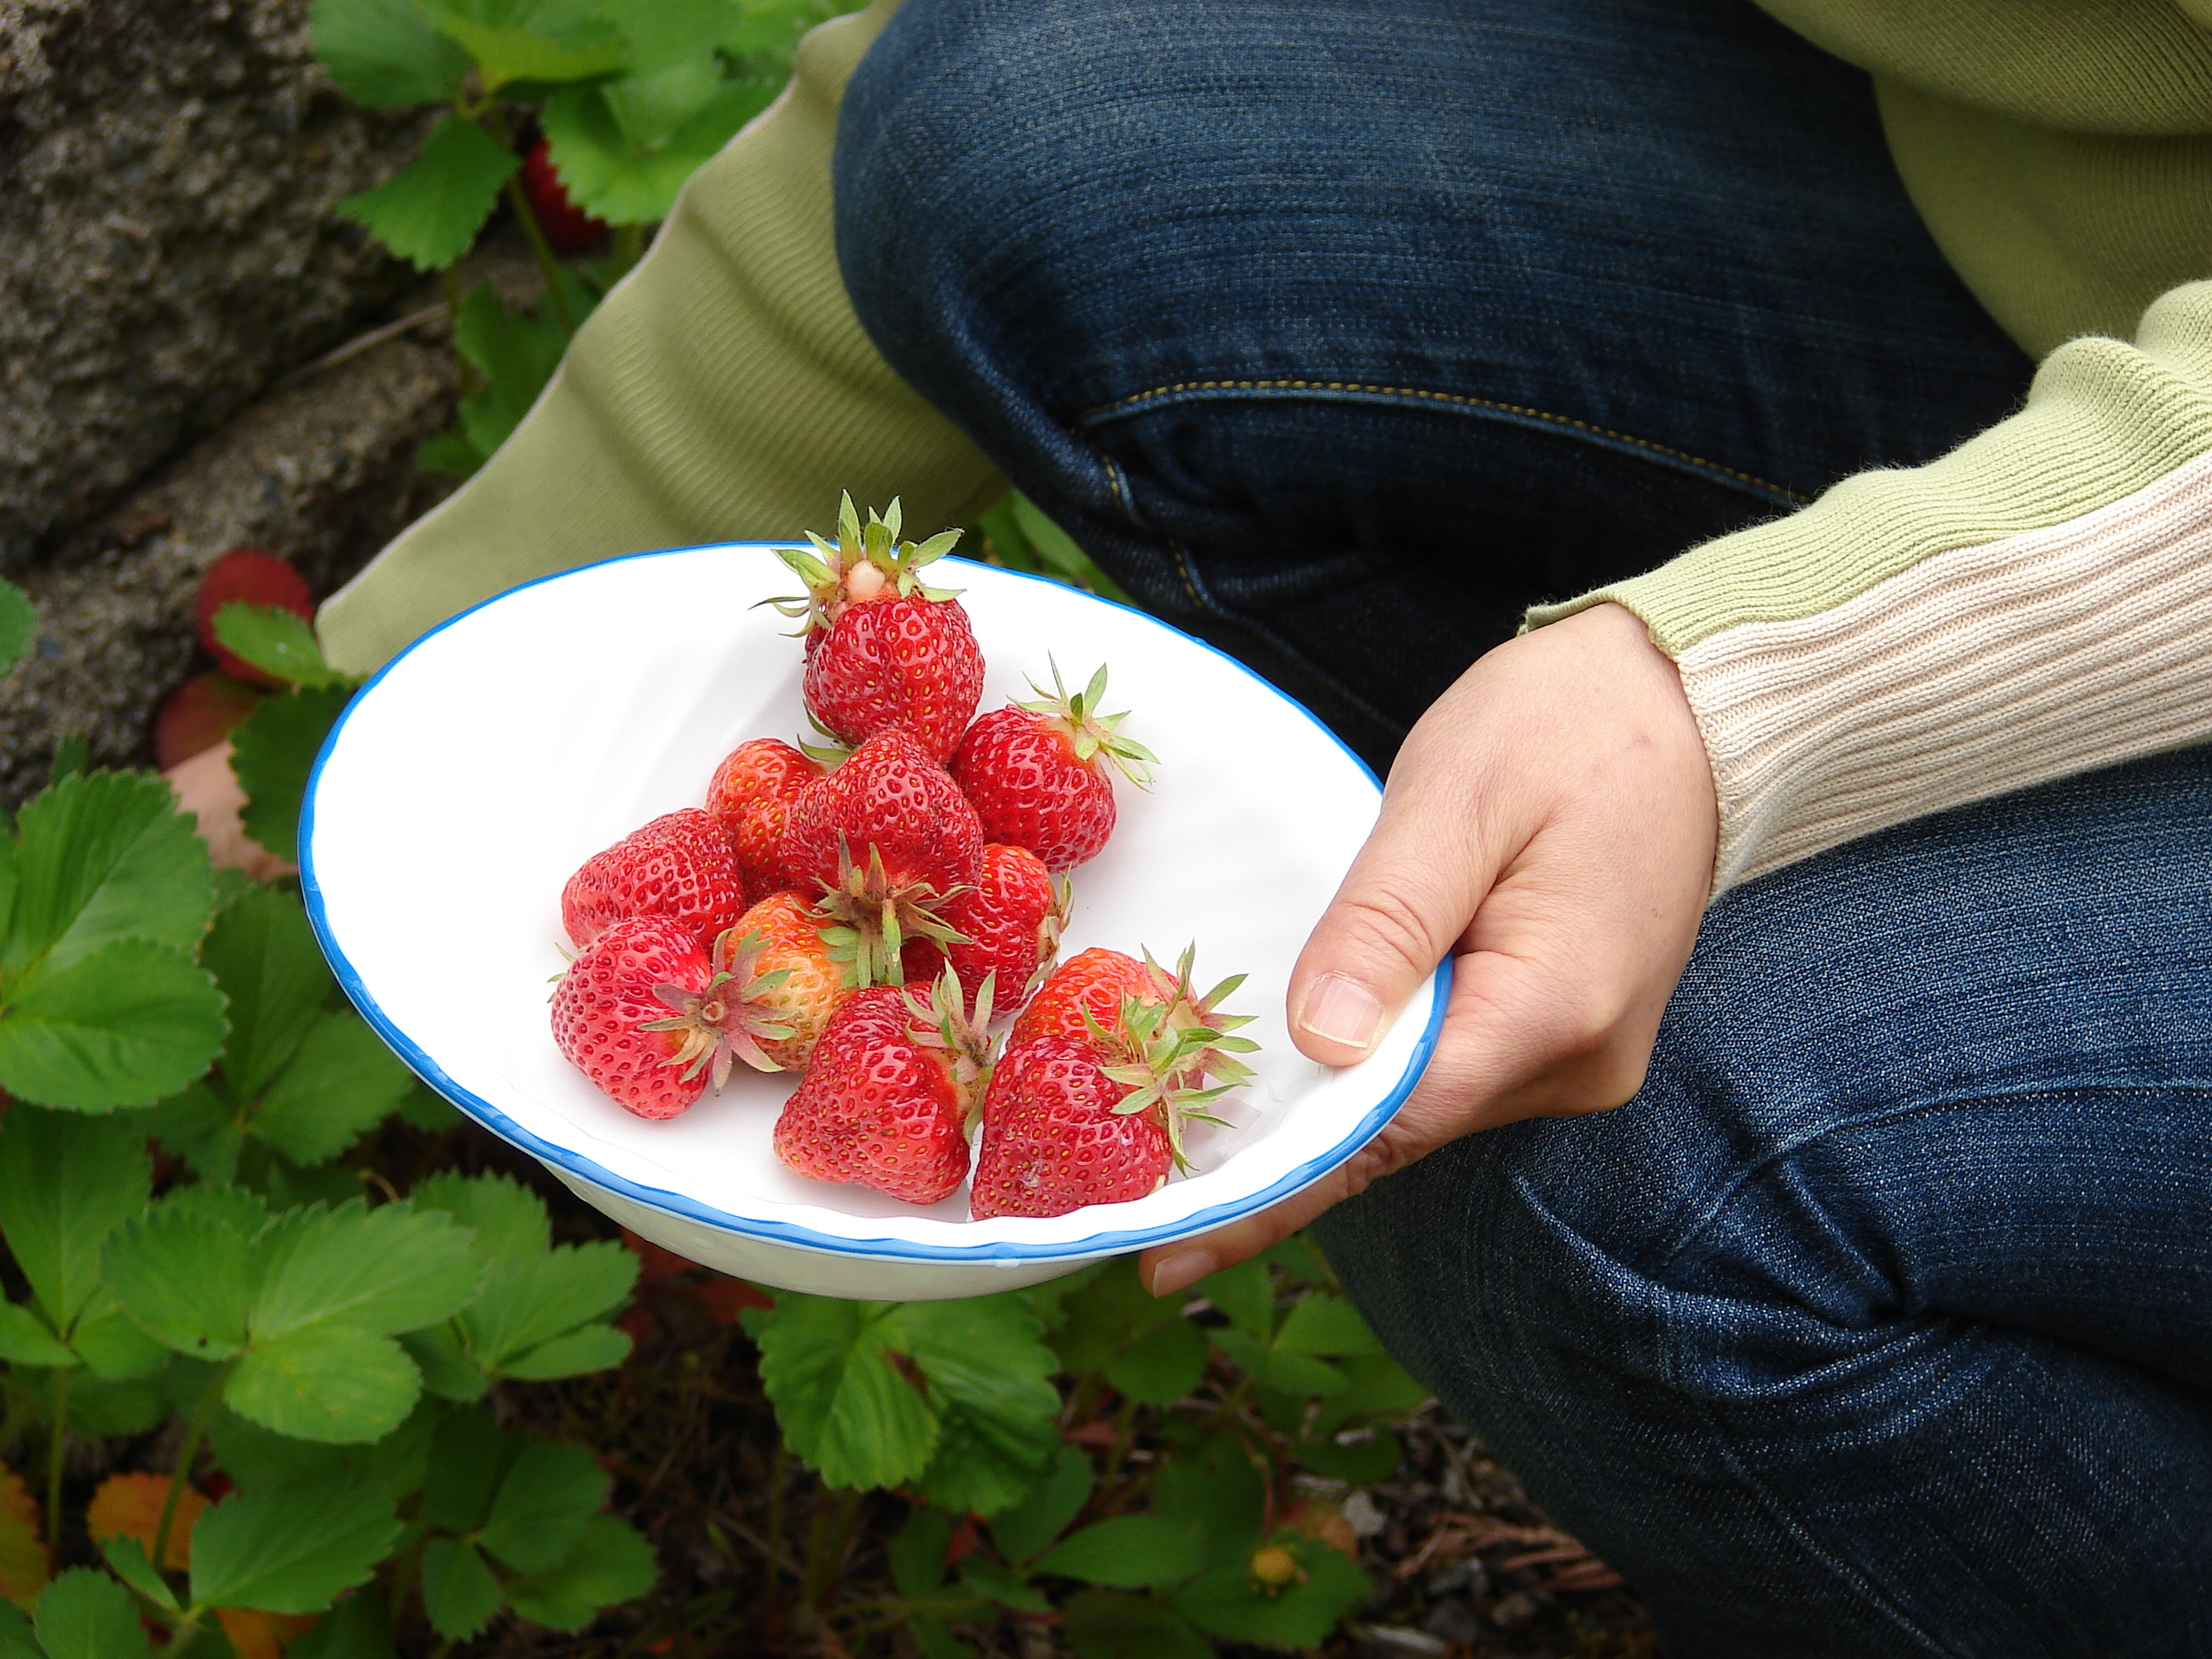 Picking home-grown garden strawberries on June 14, 2012.